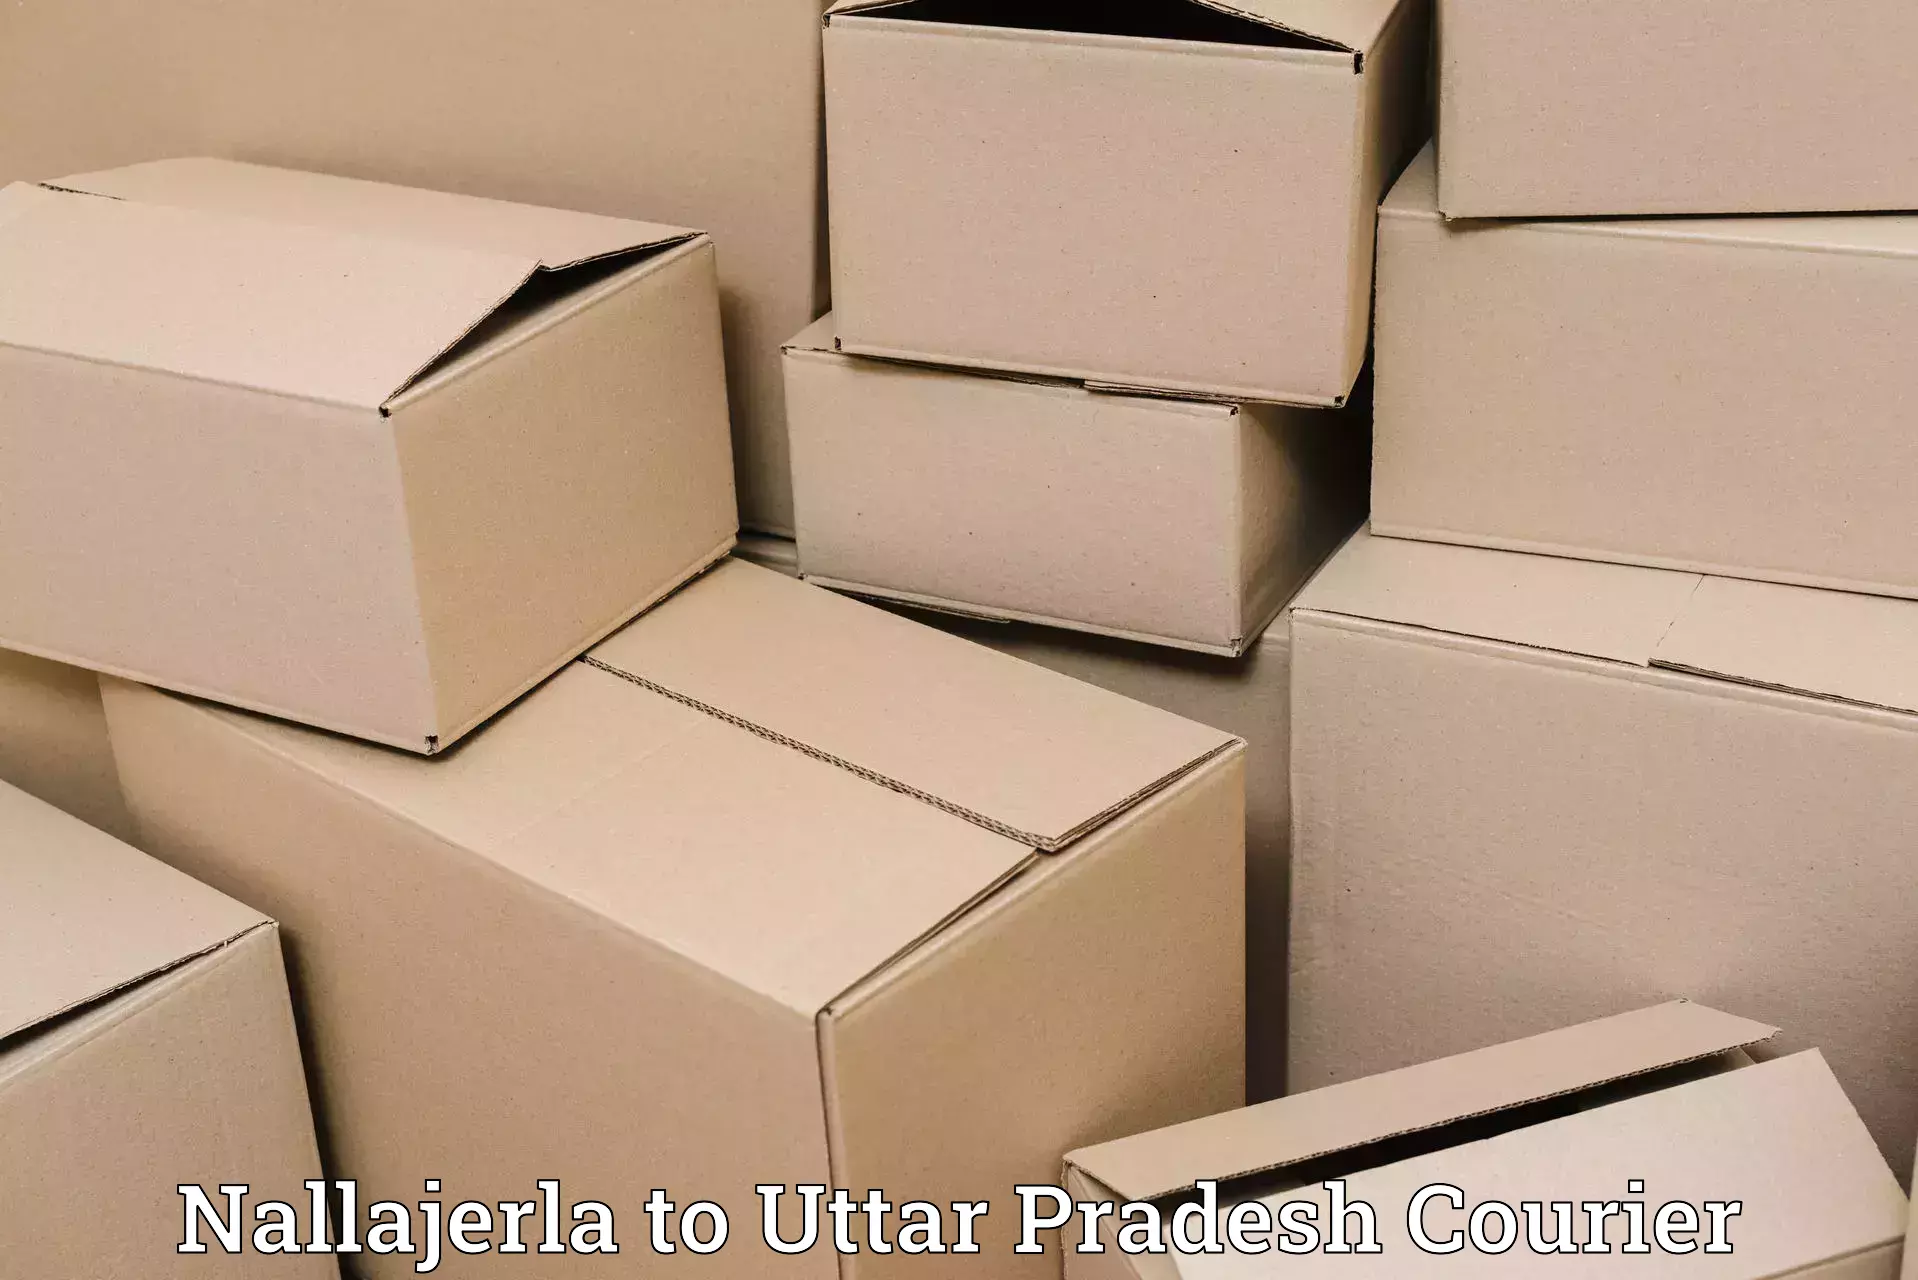 Logistics service provider Nallajerla to Uttar Pradesh